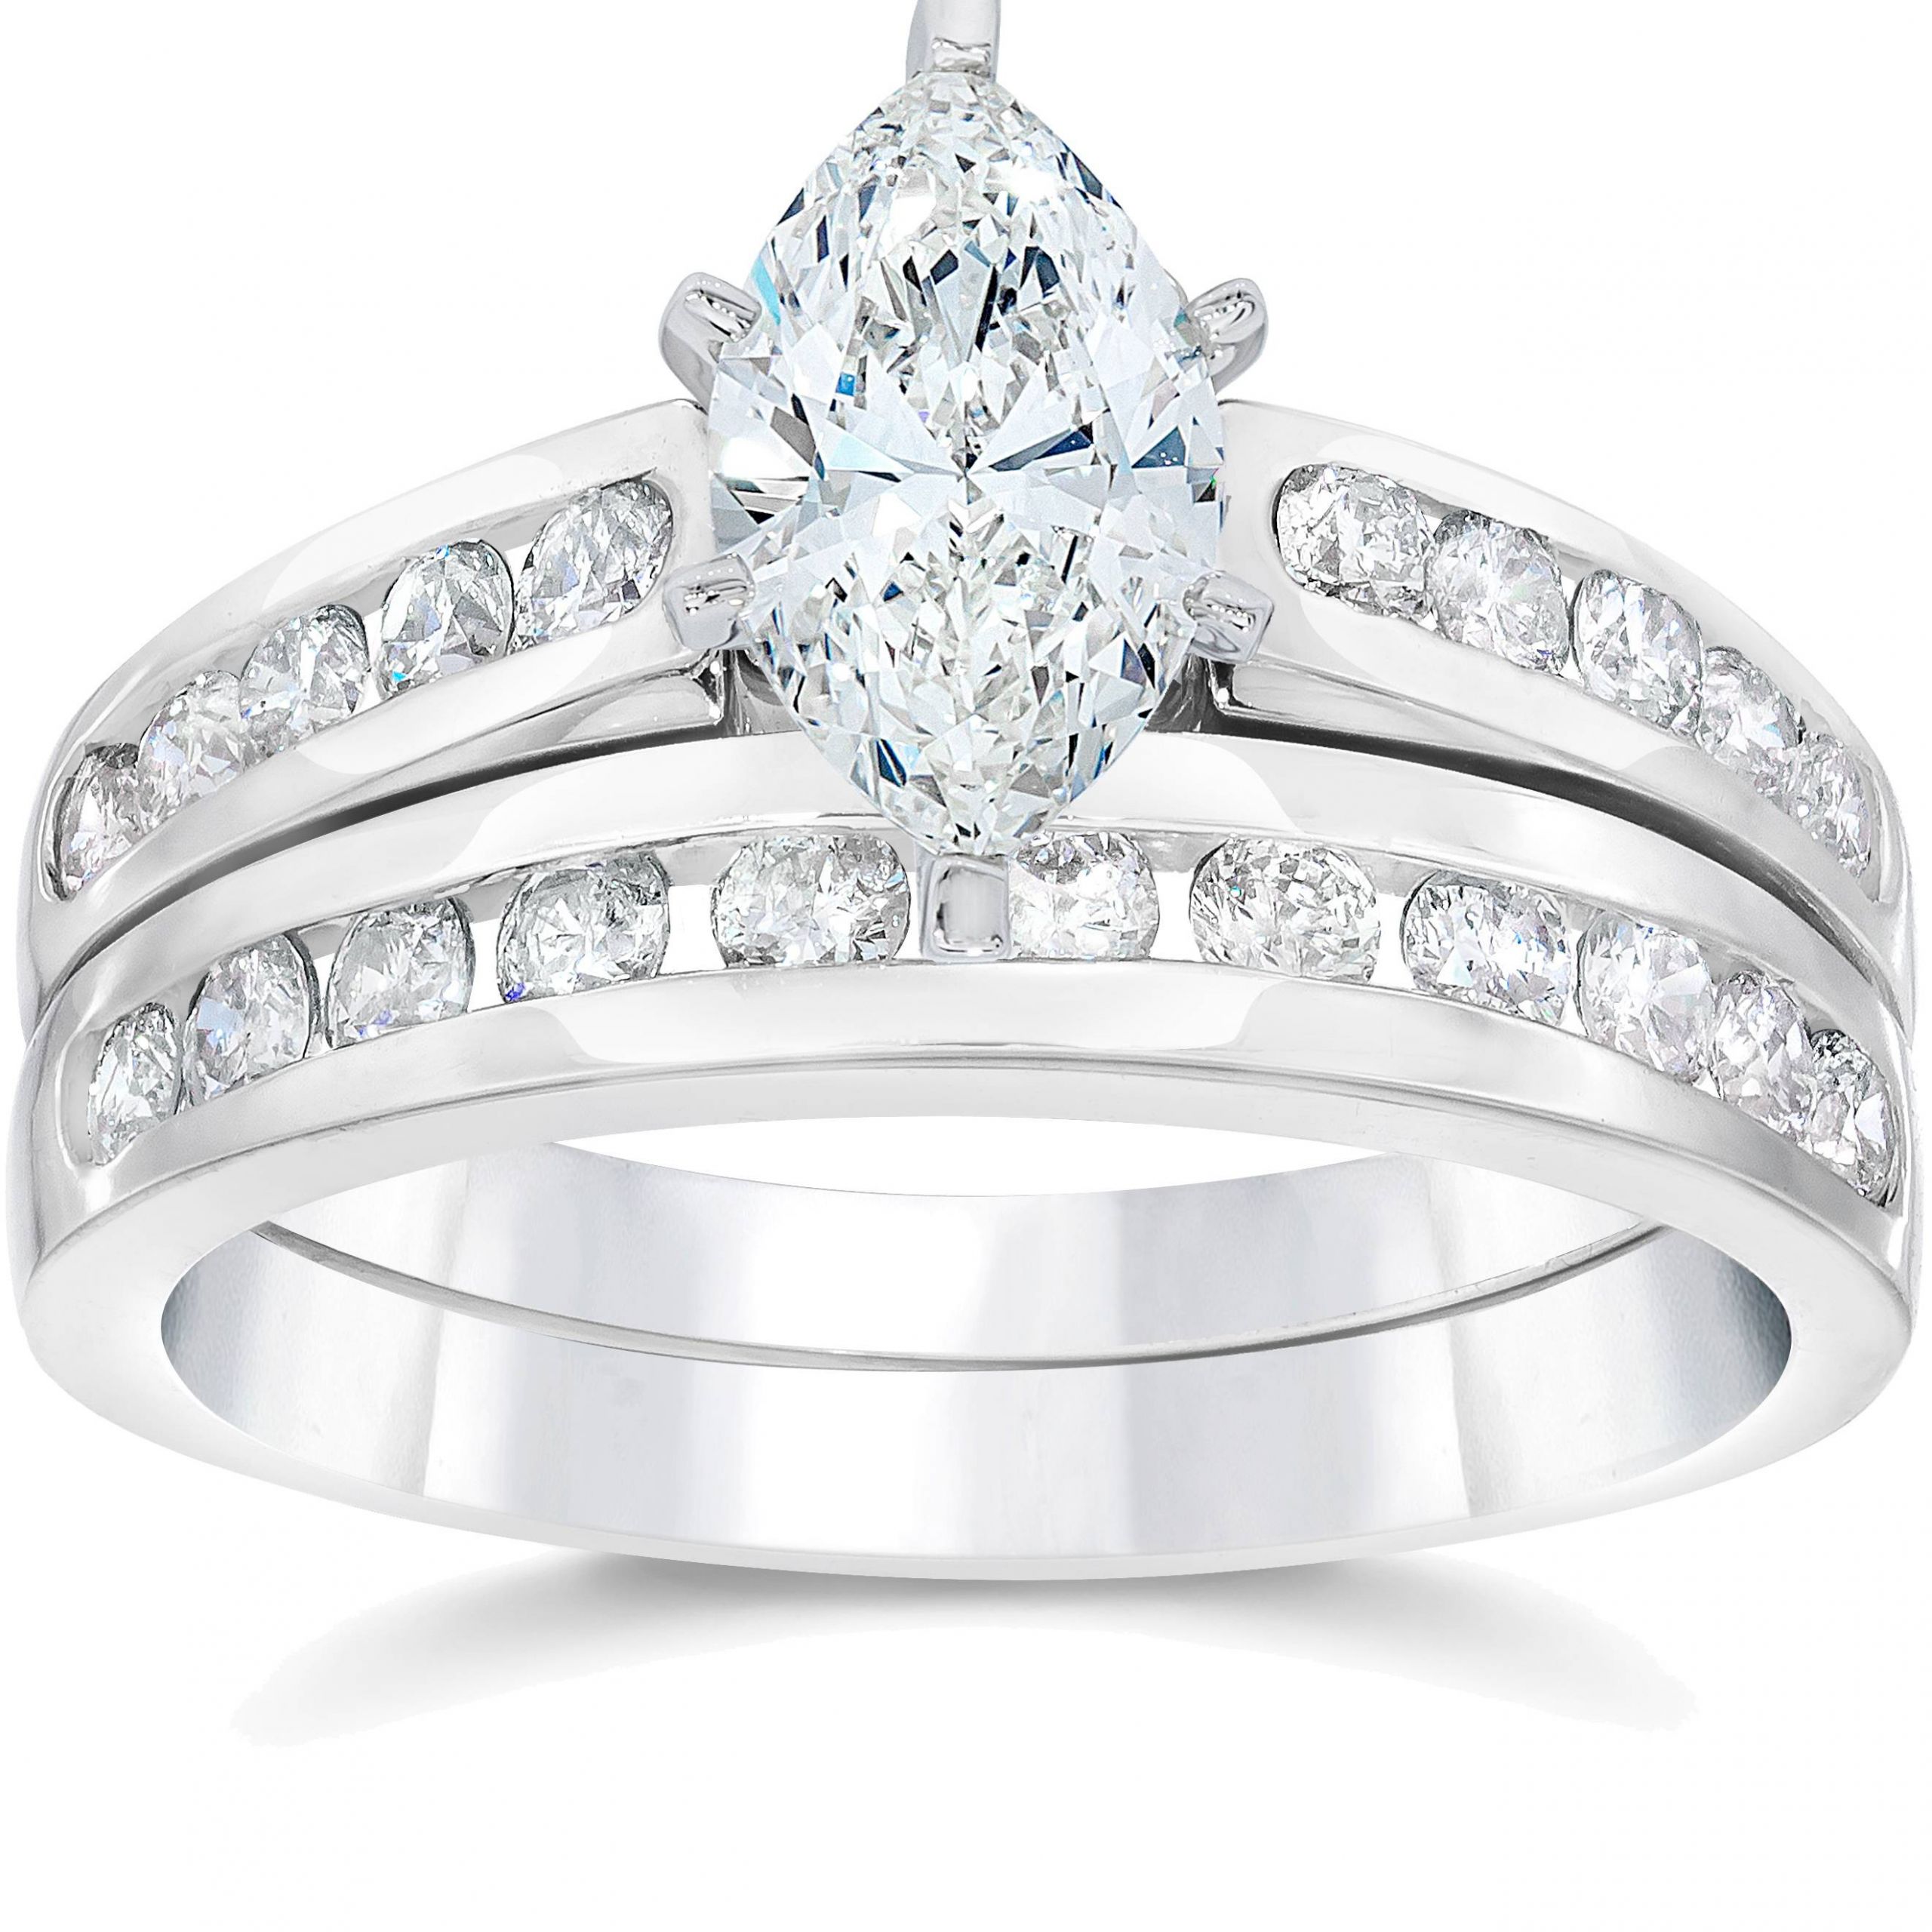 Diamond Wedding Ring Sets
 2 Carat Marquise Enhanced Diamond Engagement Wedding Ring